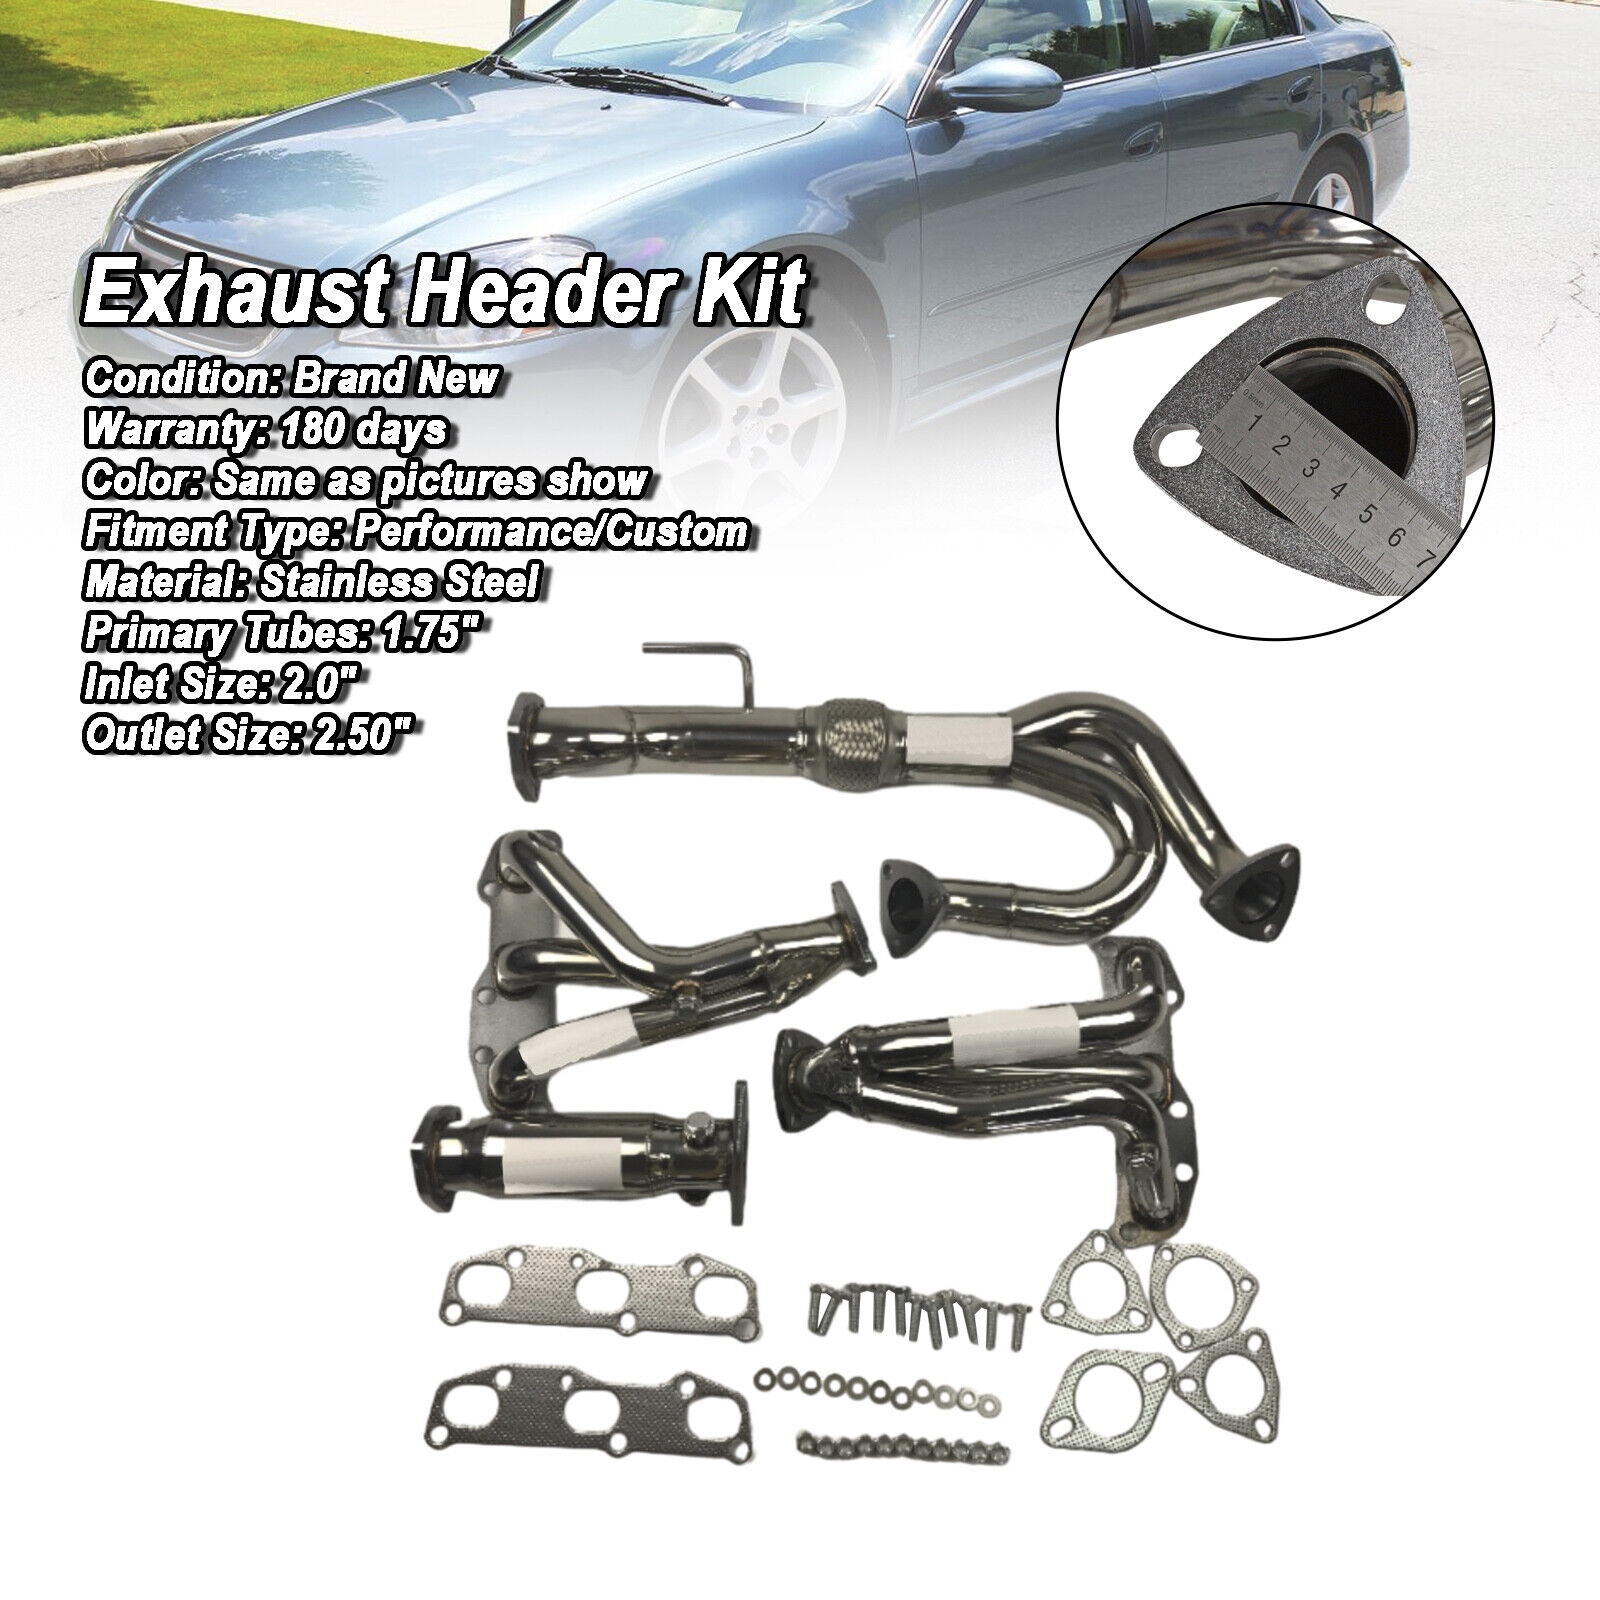 NEW 1× Exhaust Header Kit Fits Nissan Altima 3.5L V6 2002-2006 Manual Models USA